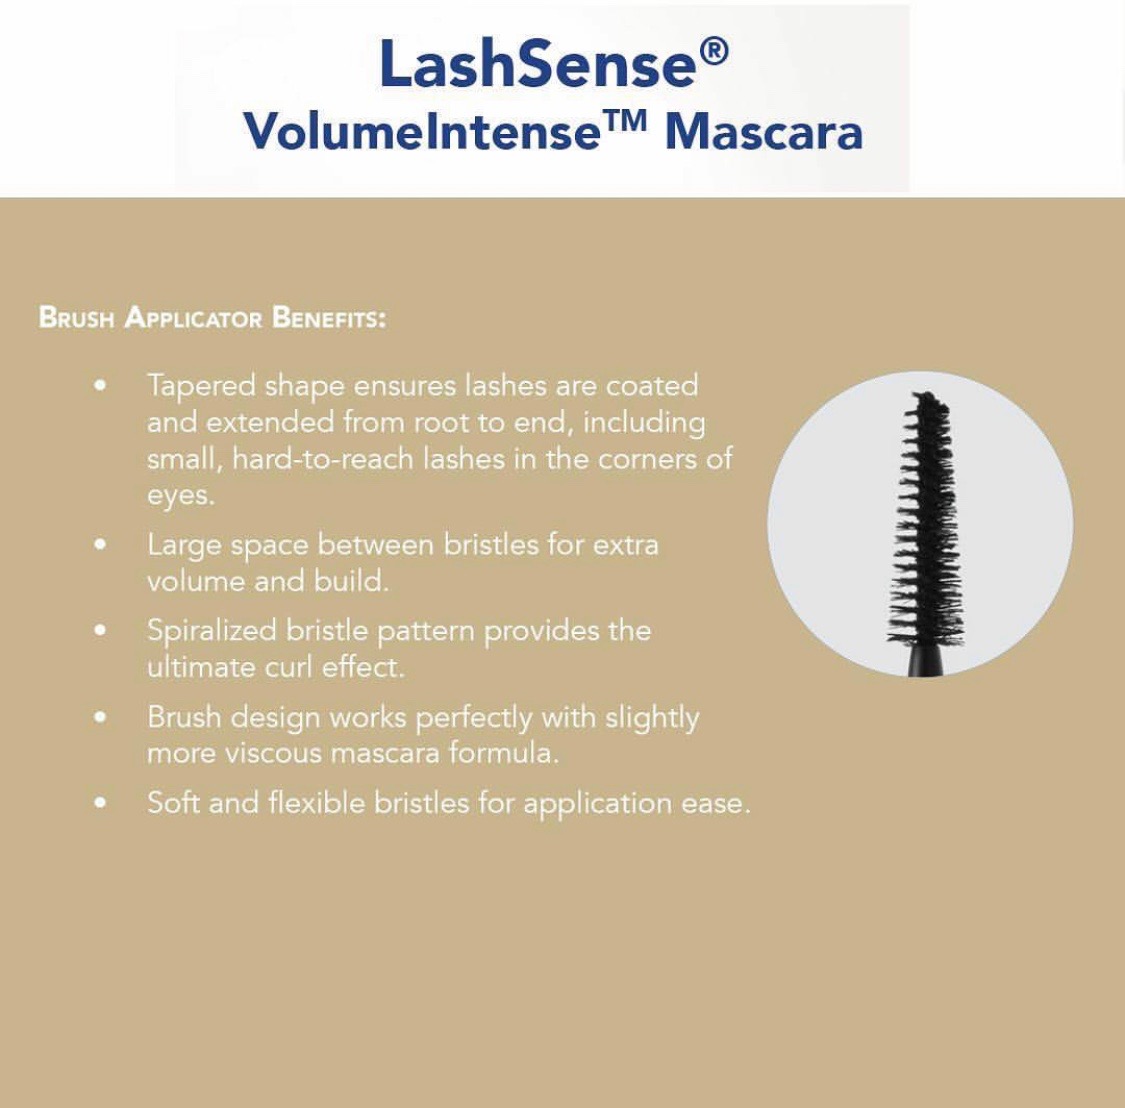 Copy of Copy of LashSense Mascara VolumeIntense Info